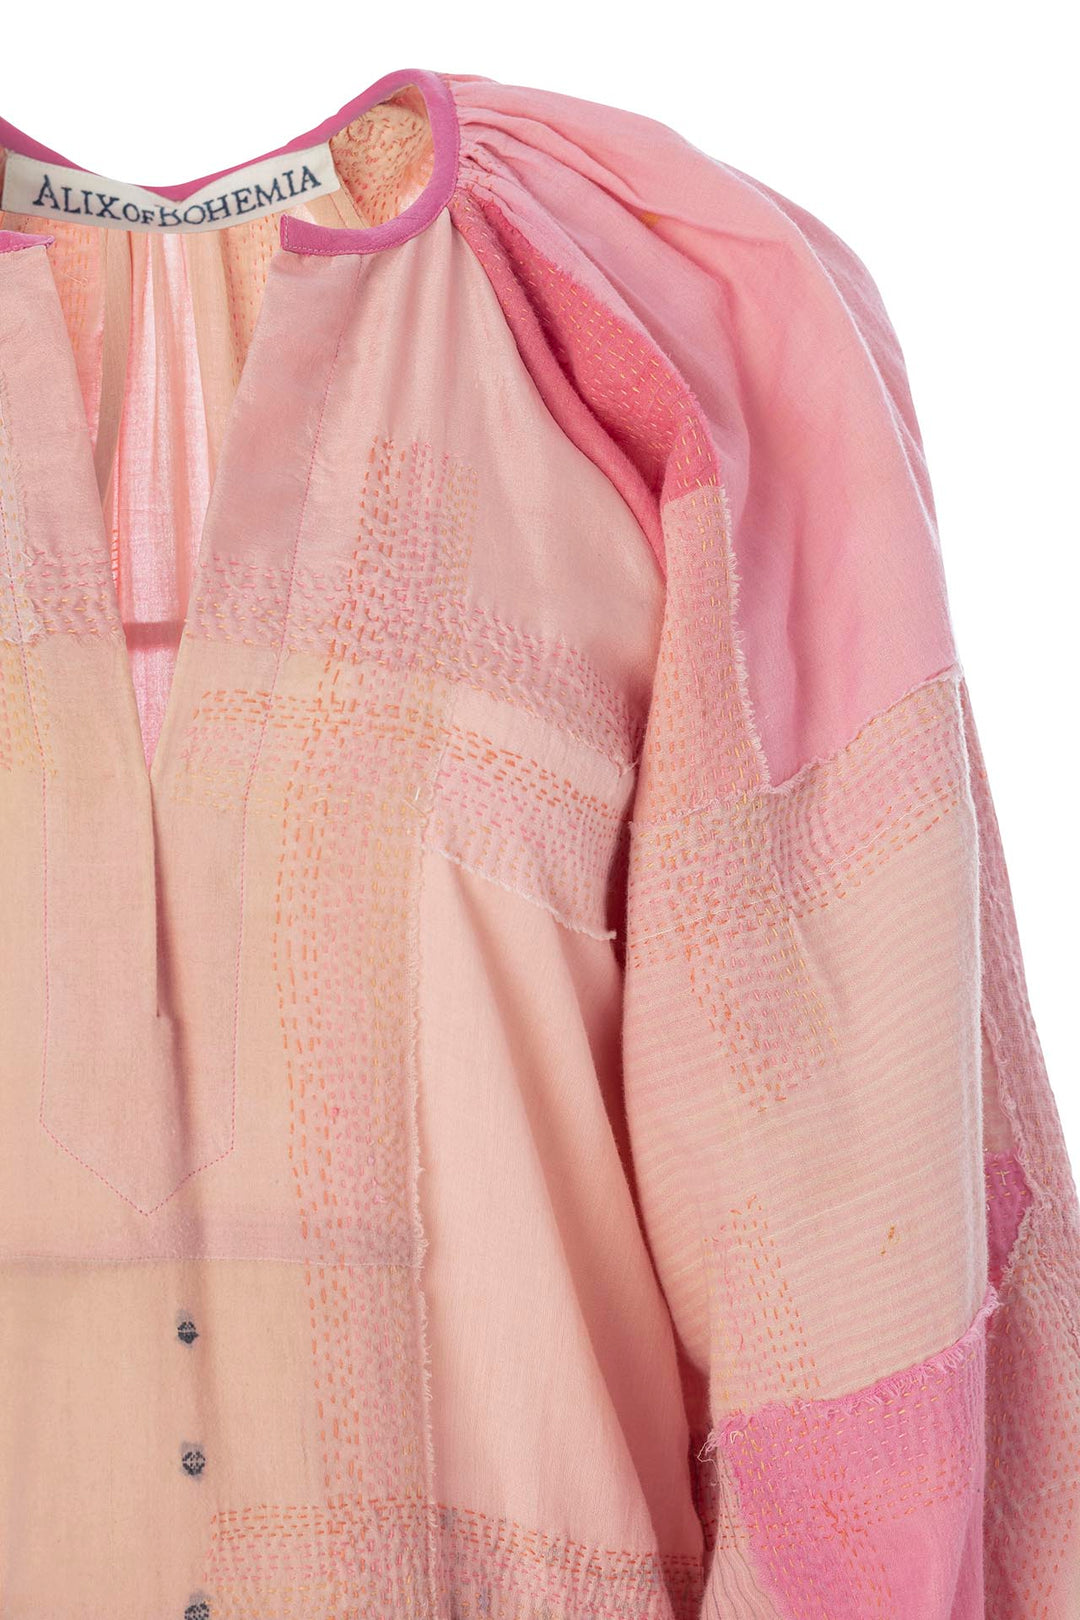 Celeste Pink Sky Sari Dress